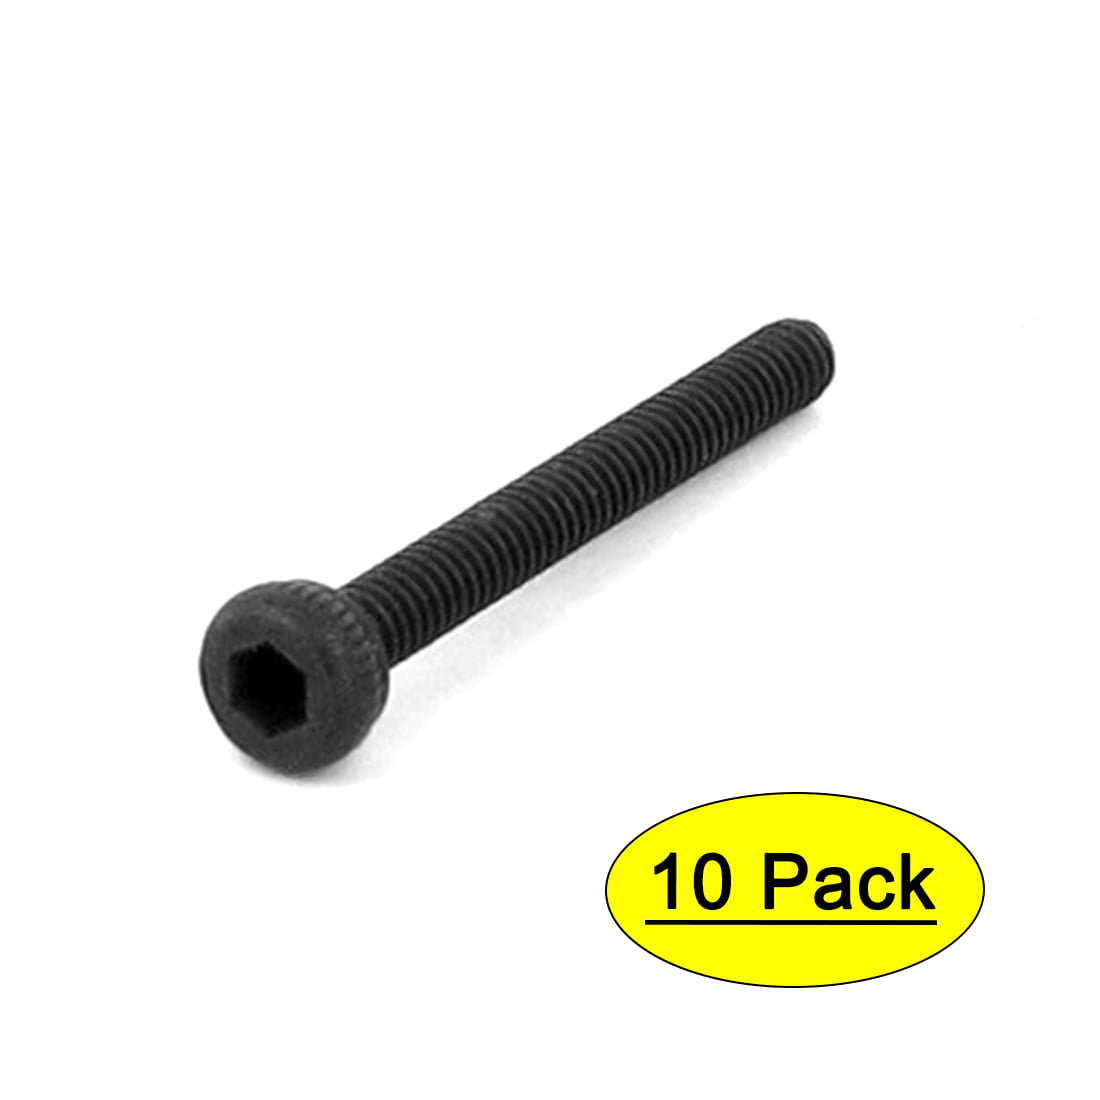 Details about   Carbon Steel Black M2 x 8mm Hex Socket Head Screw Cap Nuts Bolts Repair 100Pcs 